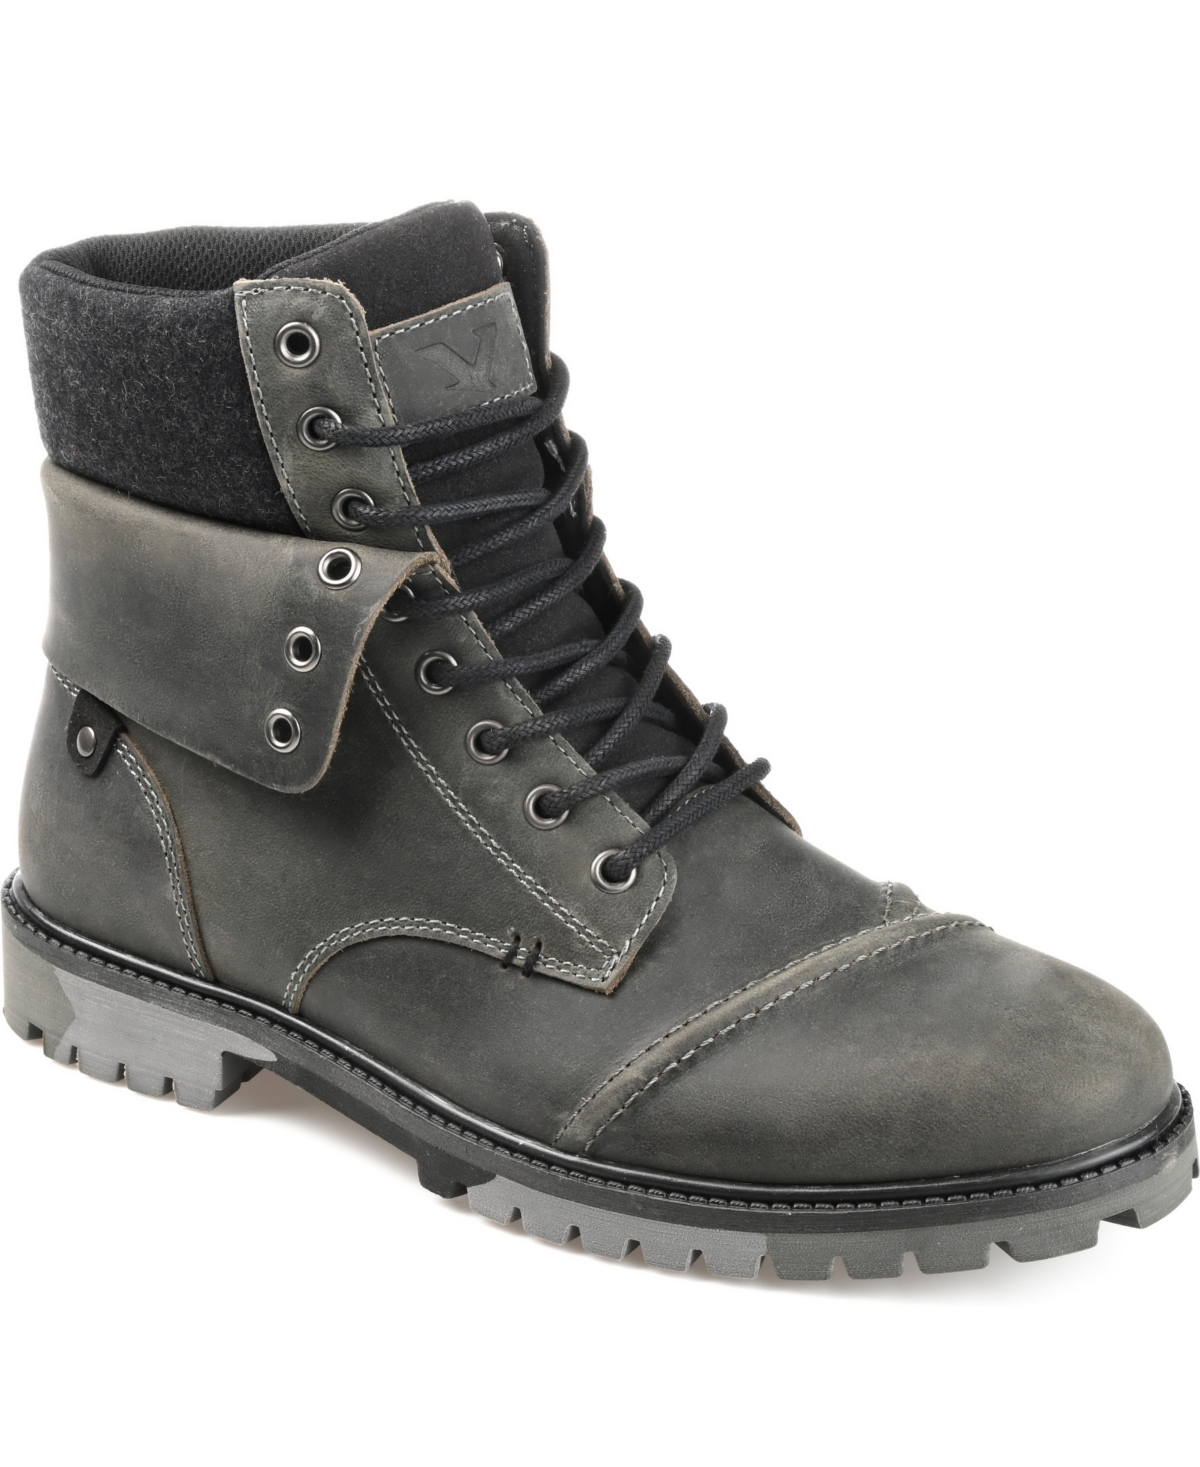 Men's Grind Cap Toe Ankle Boots - Gray